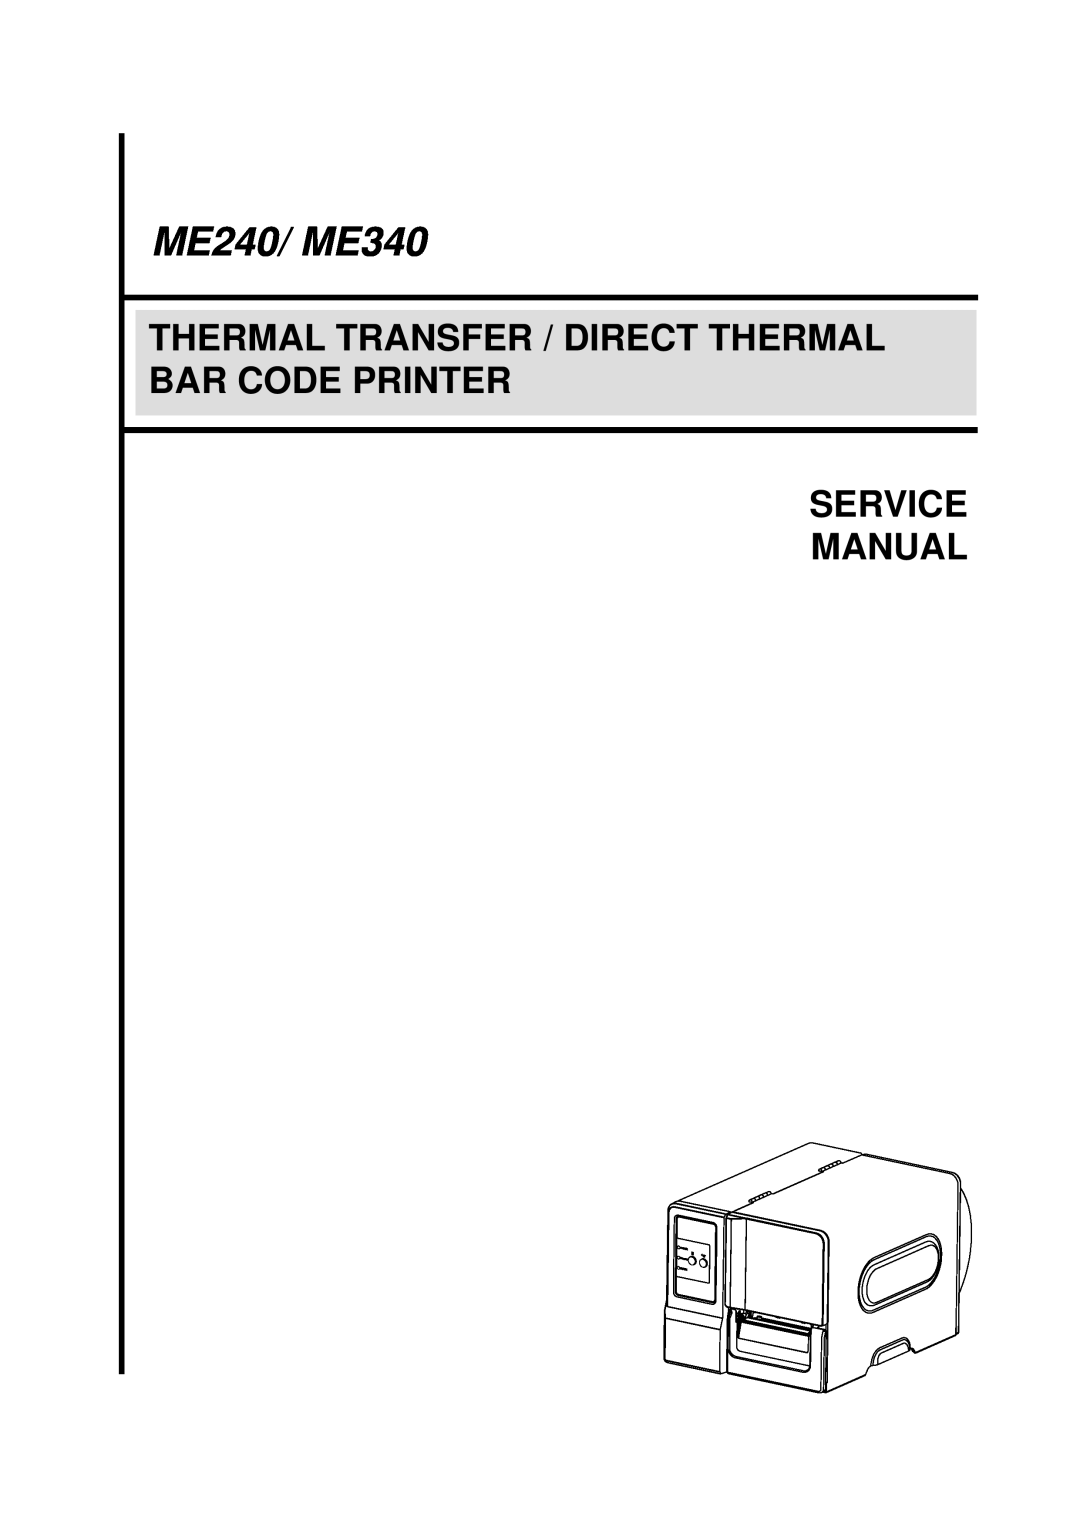 The Speaker Company me240 manual ME240/ ME340, Thermal Transfer / Direct Thermal Bar Code Printer Service Manual 